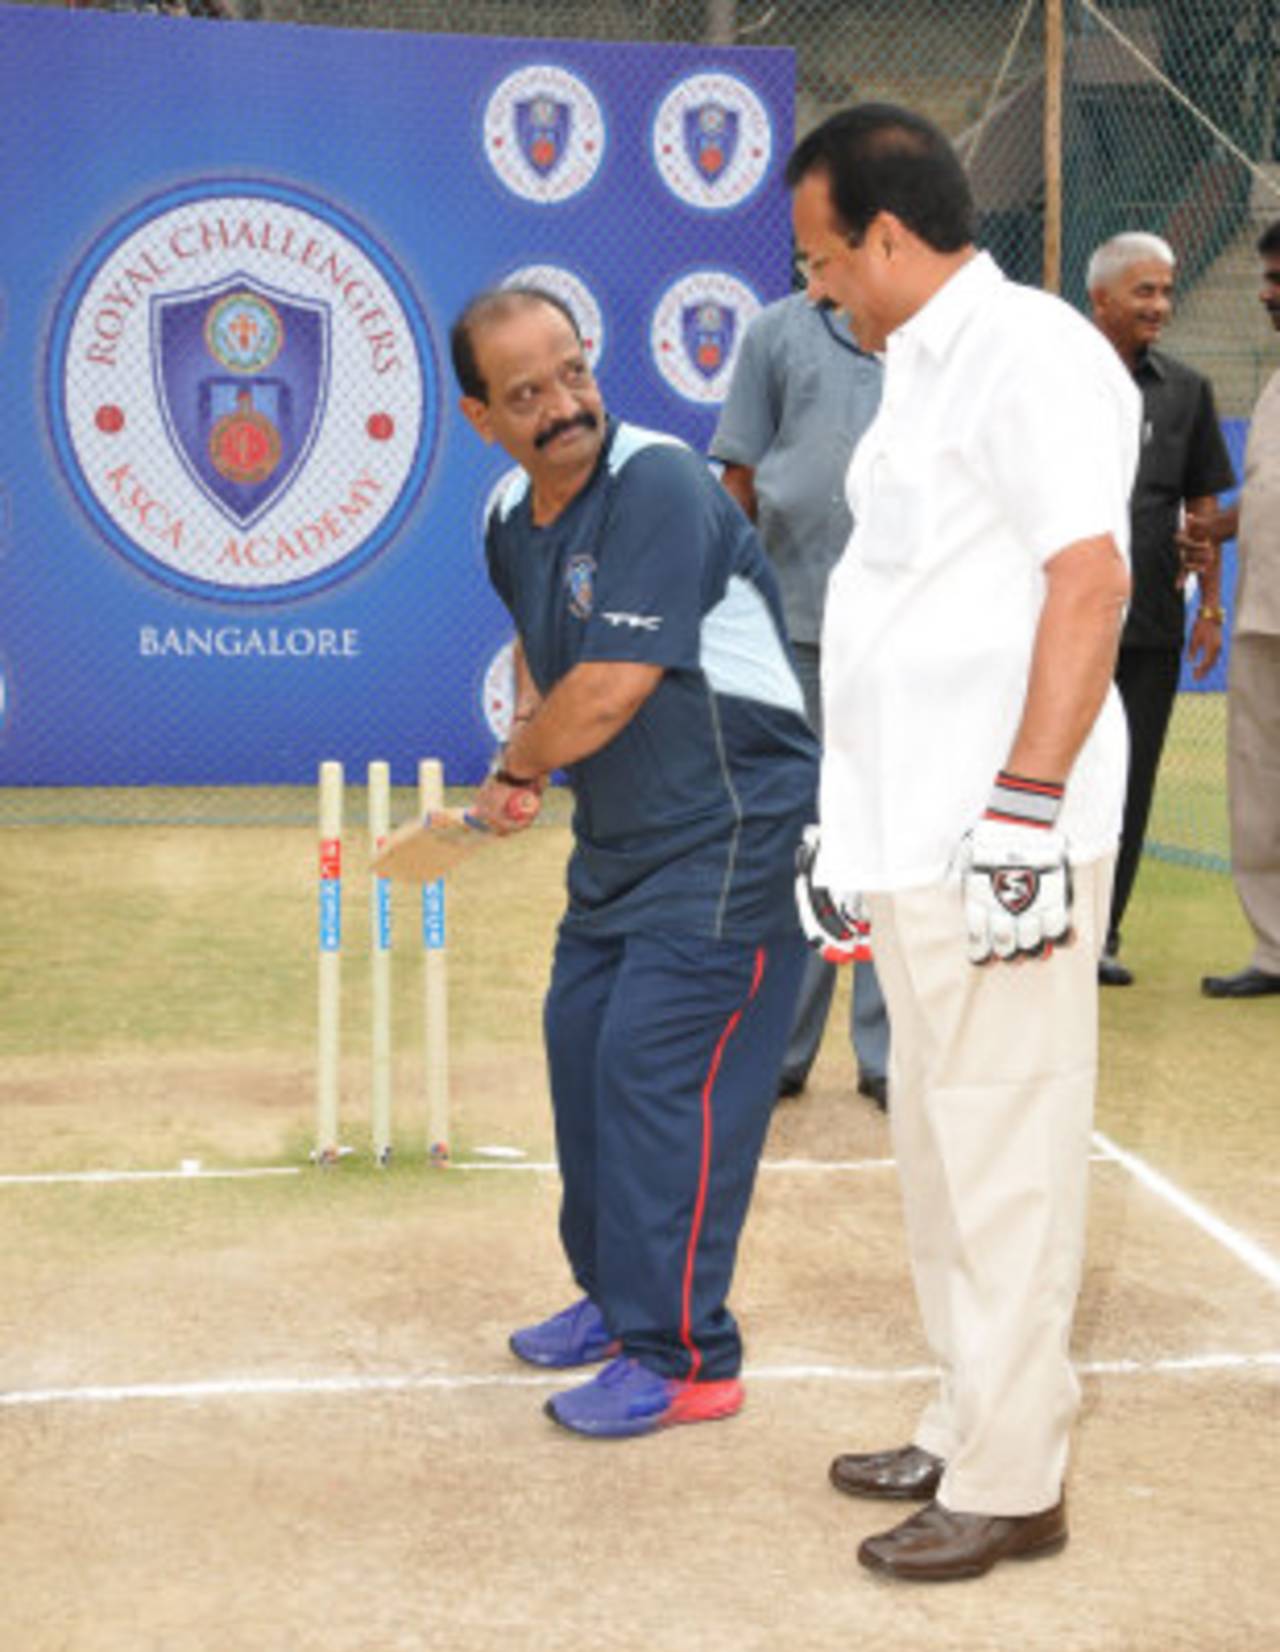 Former Indian batsman Gundappa Viswanath with the Karnataka chief minister, Bangalore, June 18, 2012